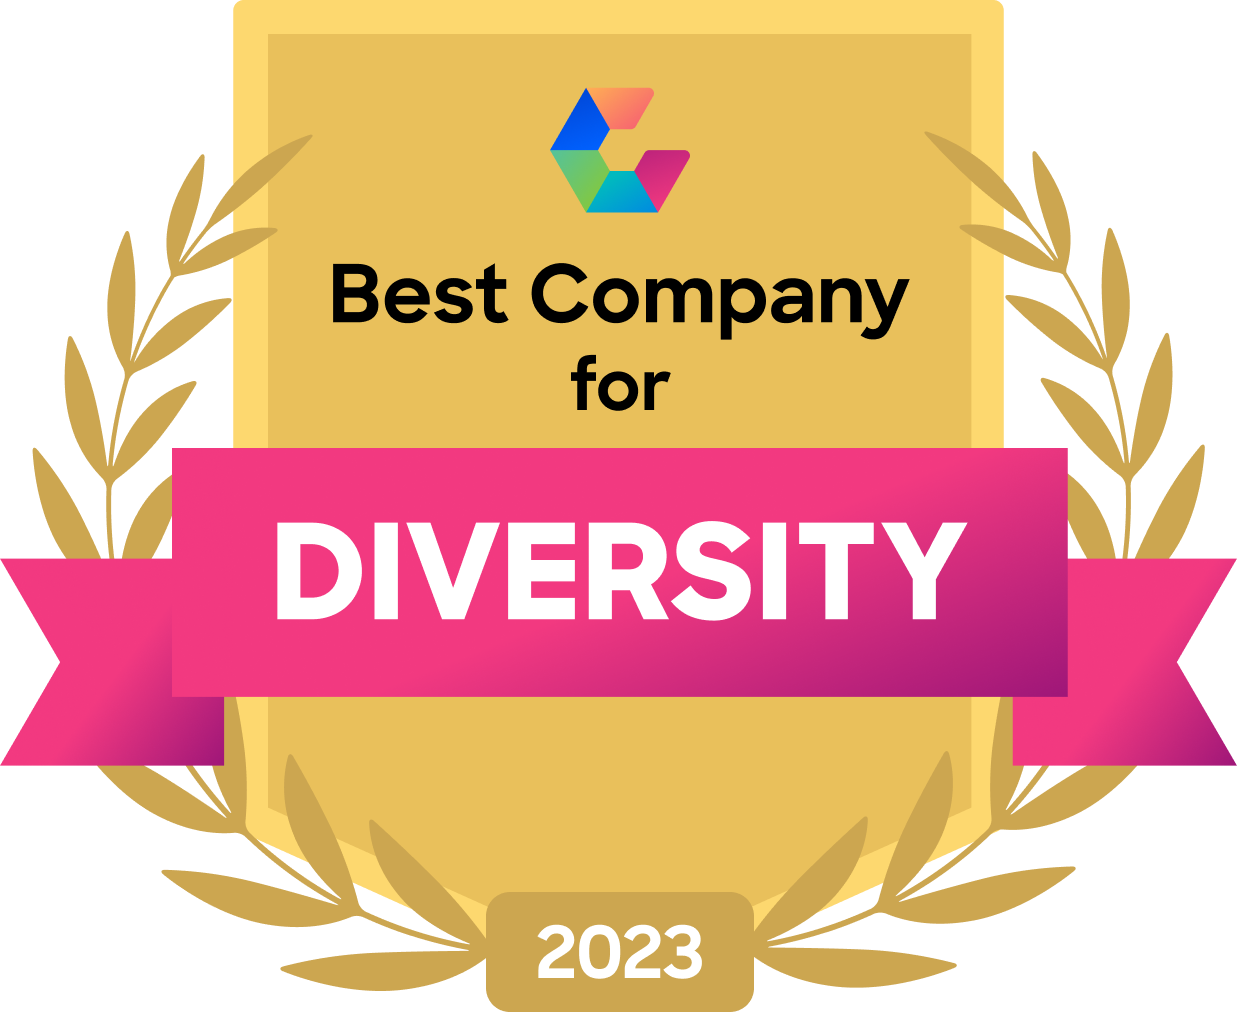 Best Company for Diversity Award